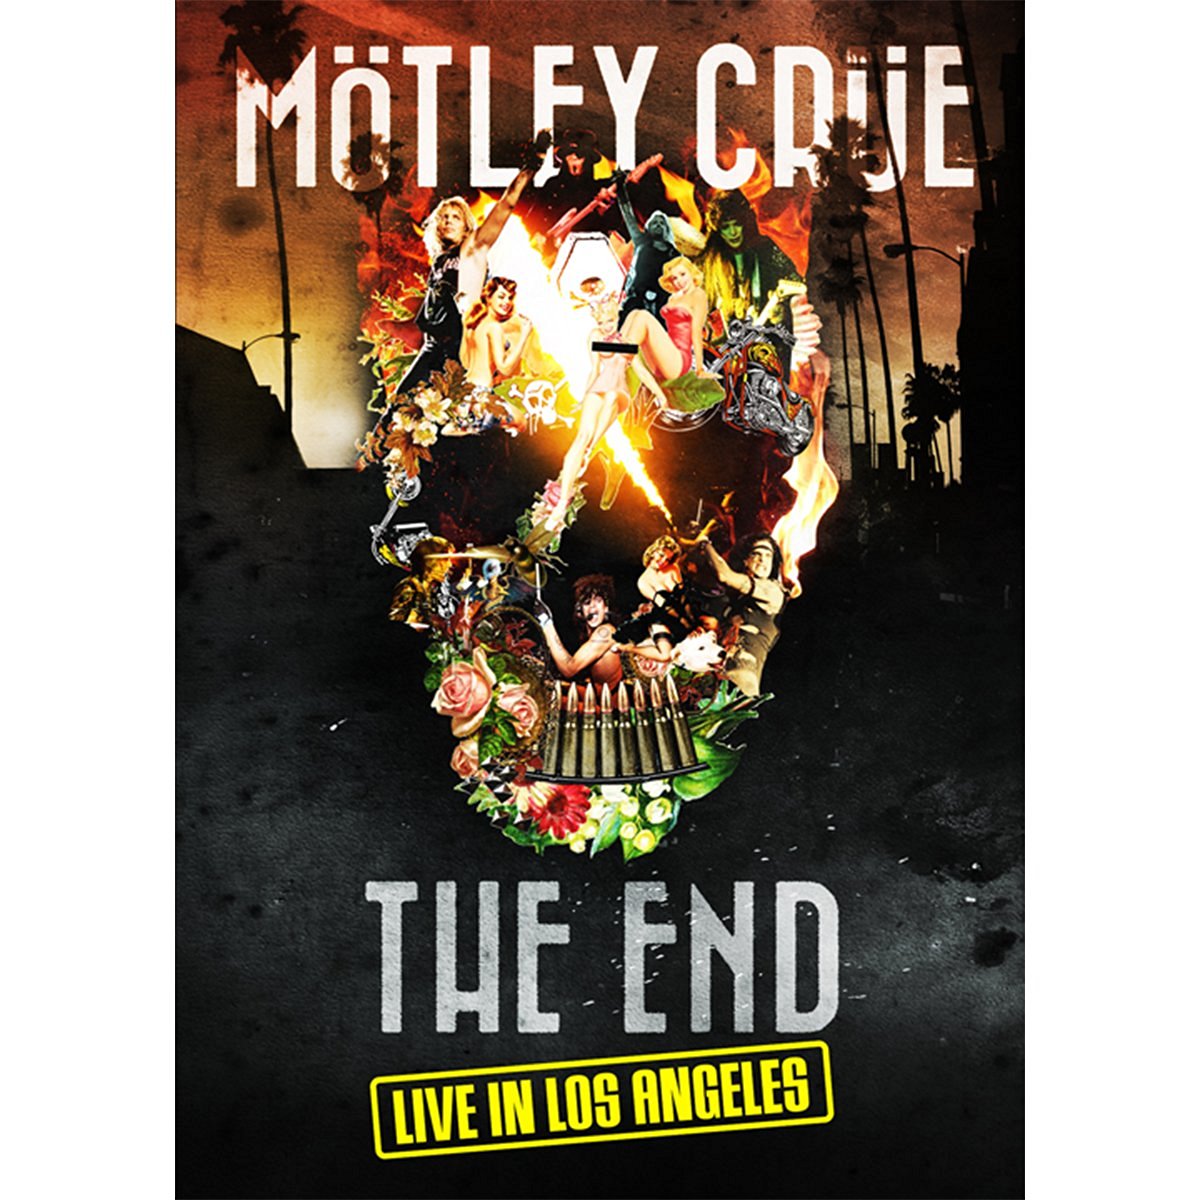 「THE END」ラスト ライヴ イン ロサンゼルス 2015年12月31日 劇場公開ドキュメンタリー映画「THE END」 モトリー クルー